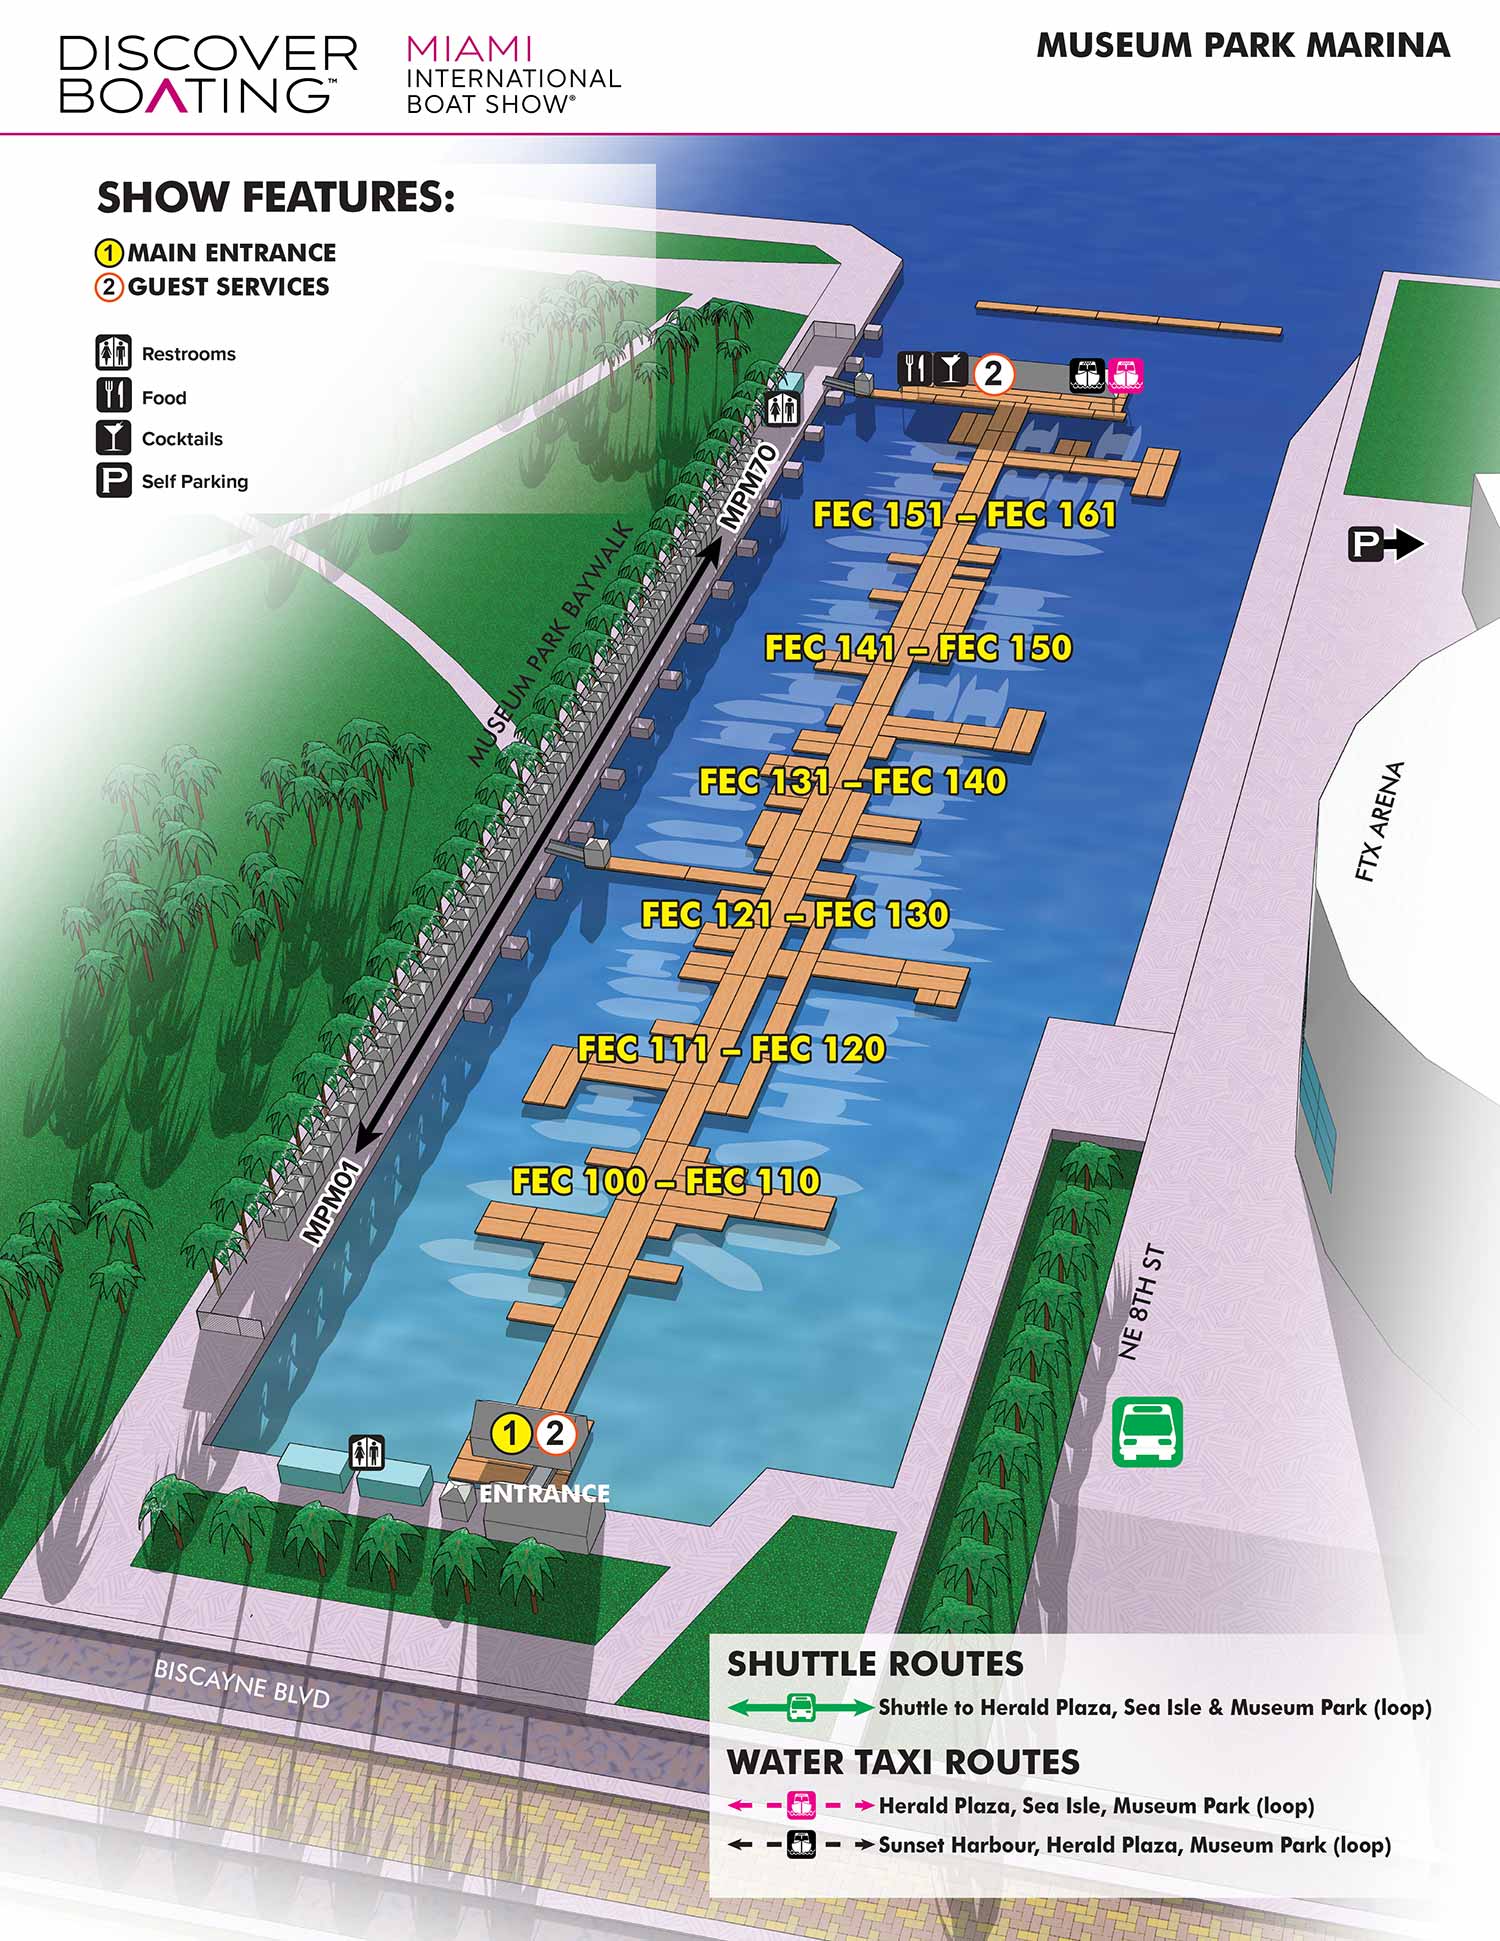 Miami International Boat Show - MUSEUM PARK MARINA MAP